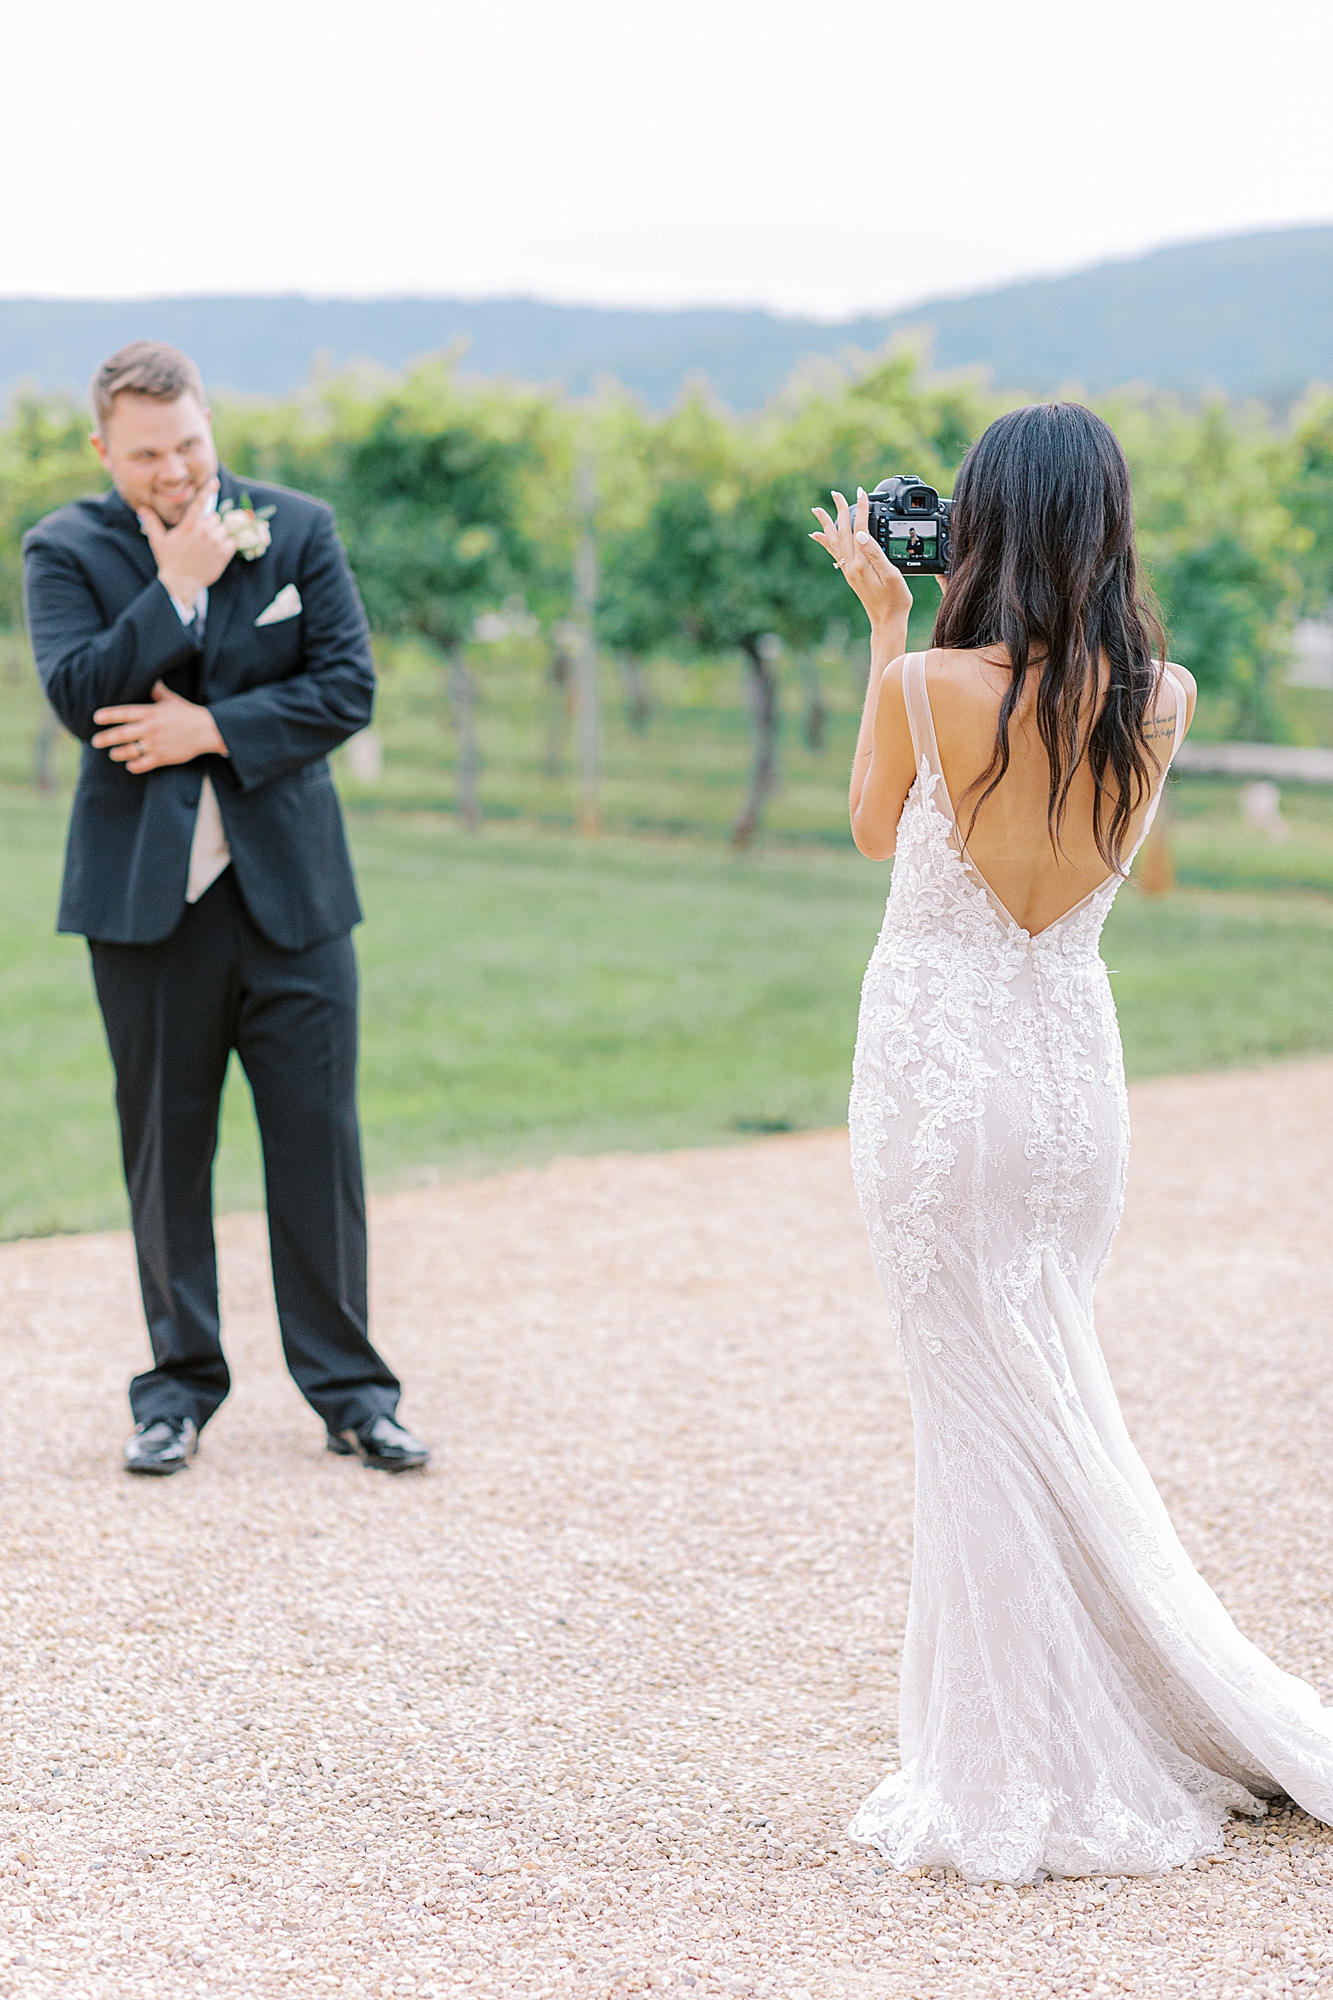 Bride taking photo of groom.